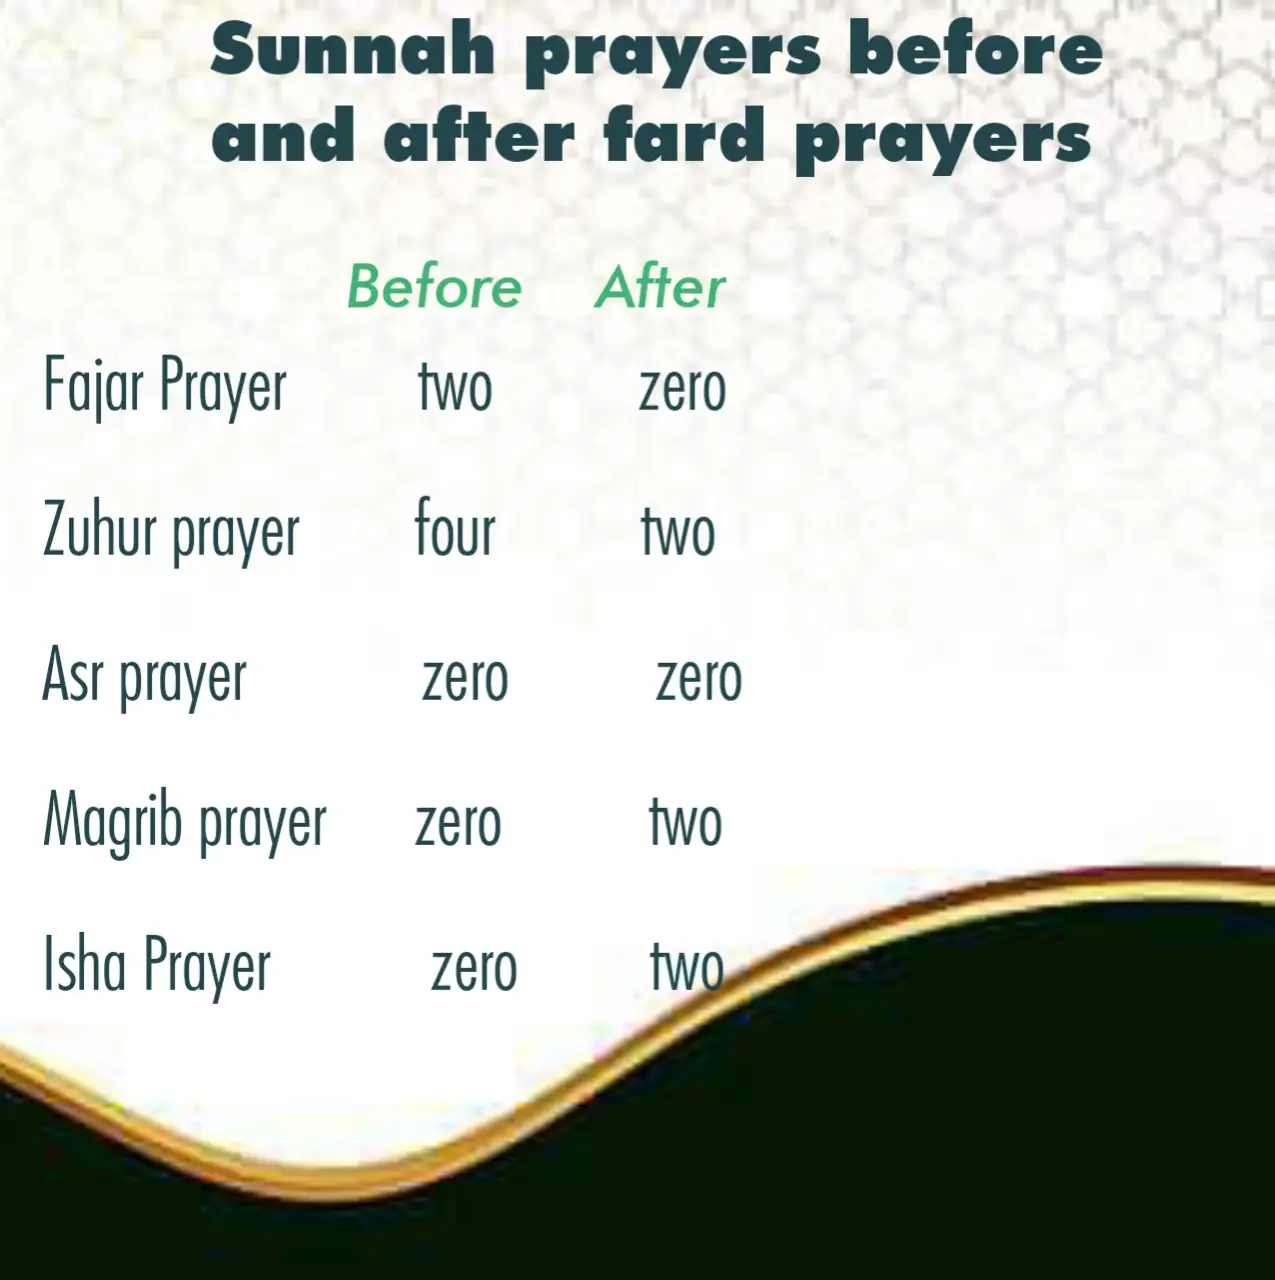 sunnah prayers before and after fard prayers